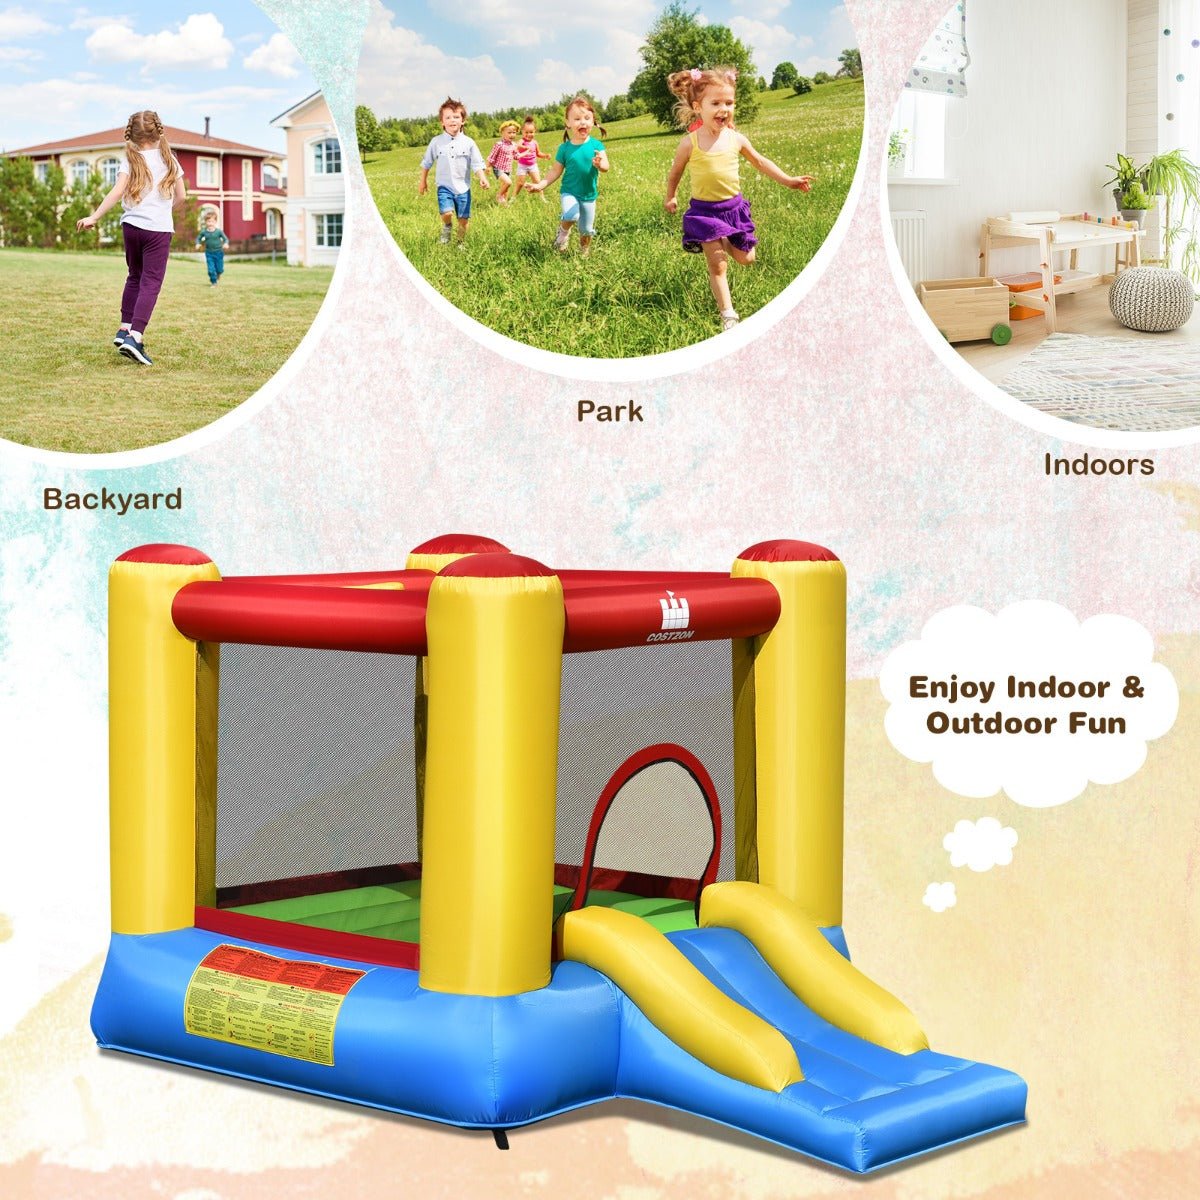 Children's Jumping Castle with Slide & Basketball Hoop - Playful Adventure